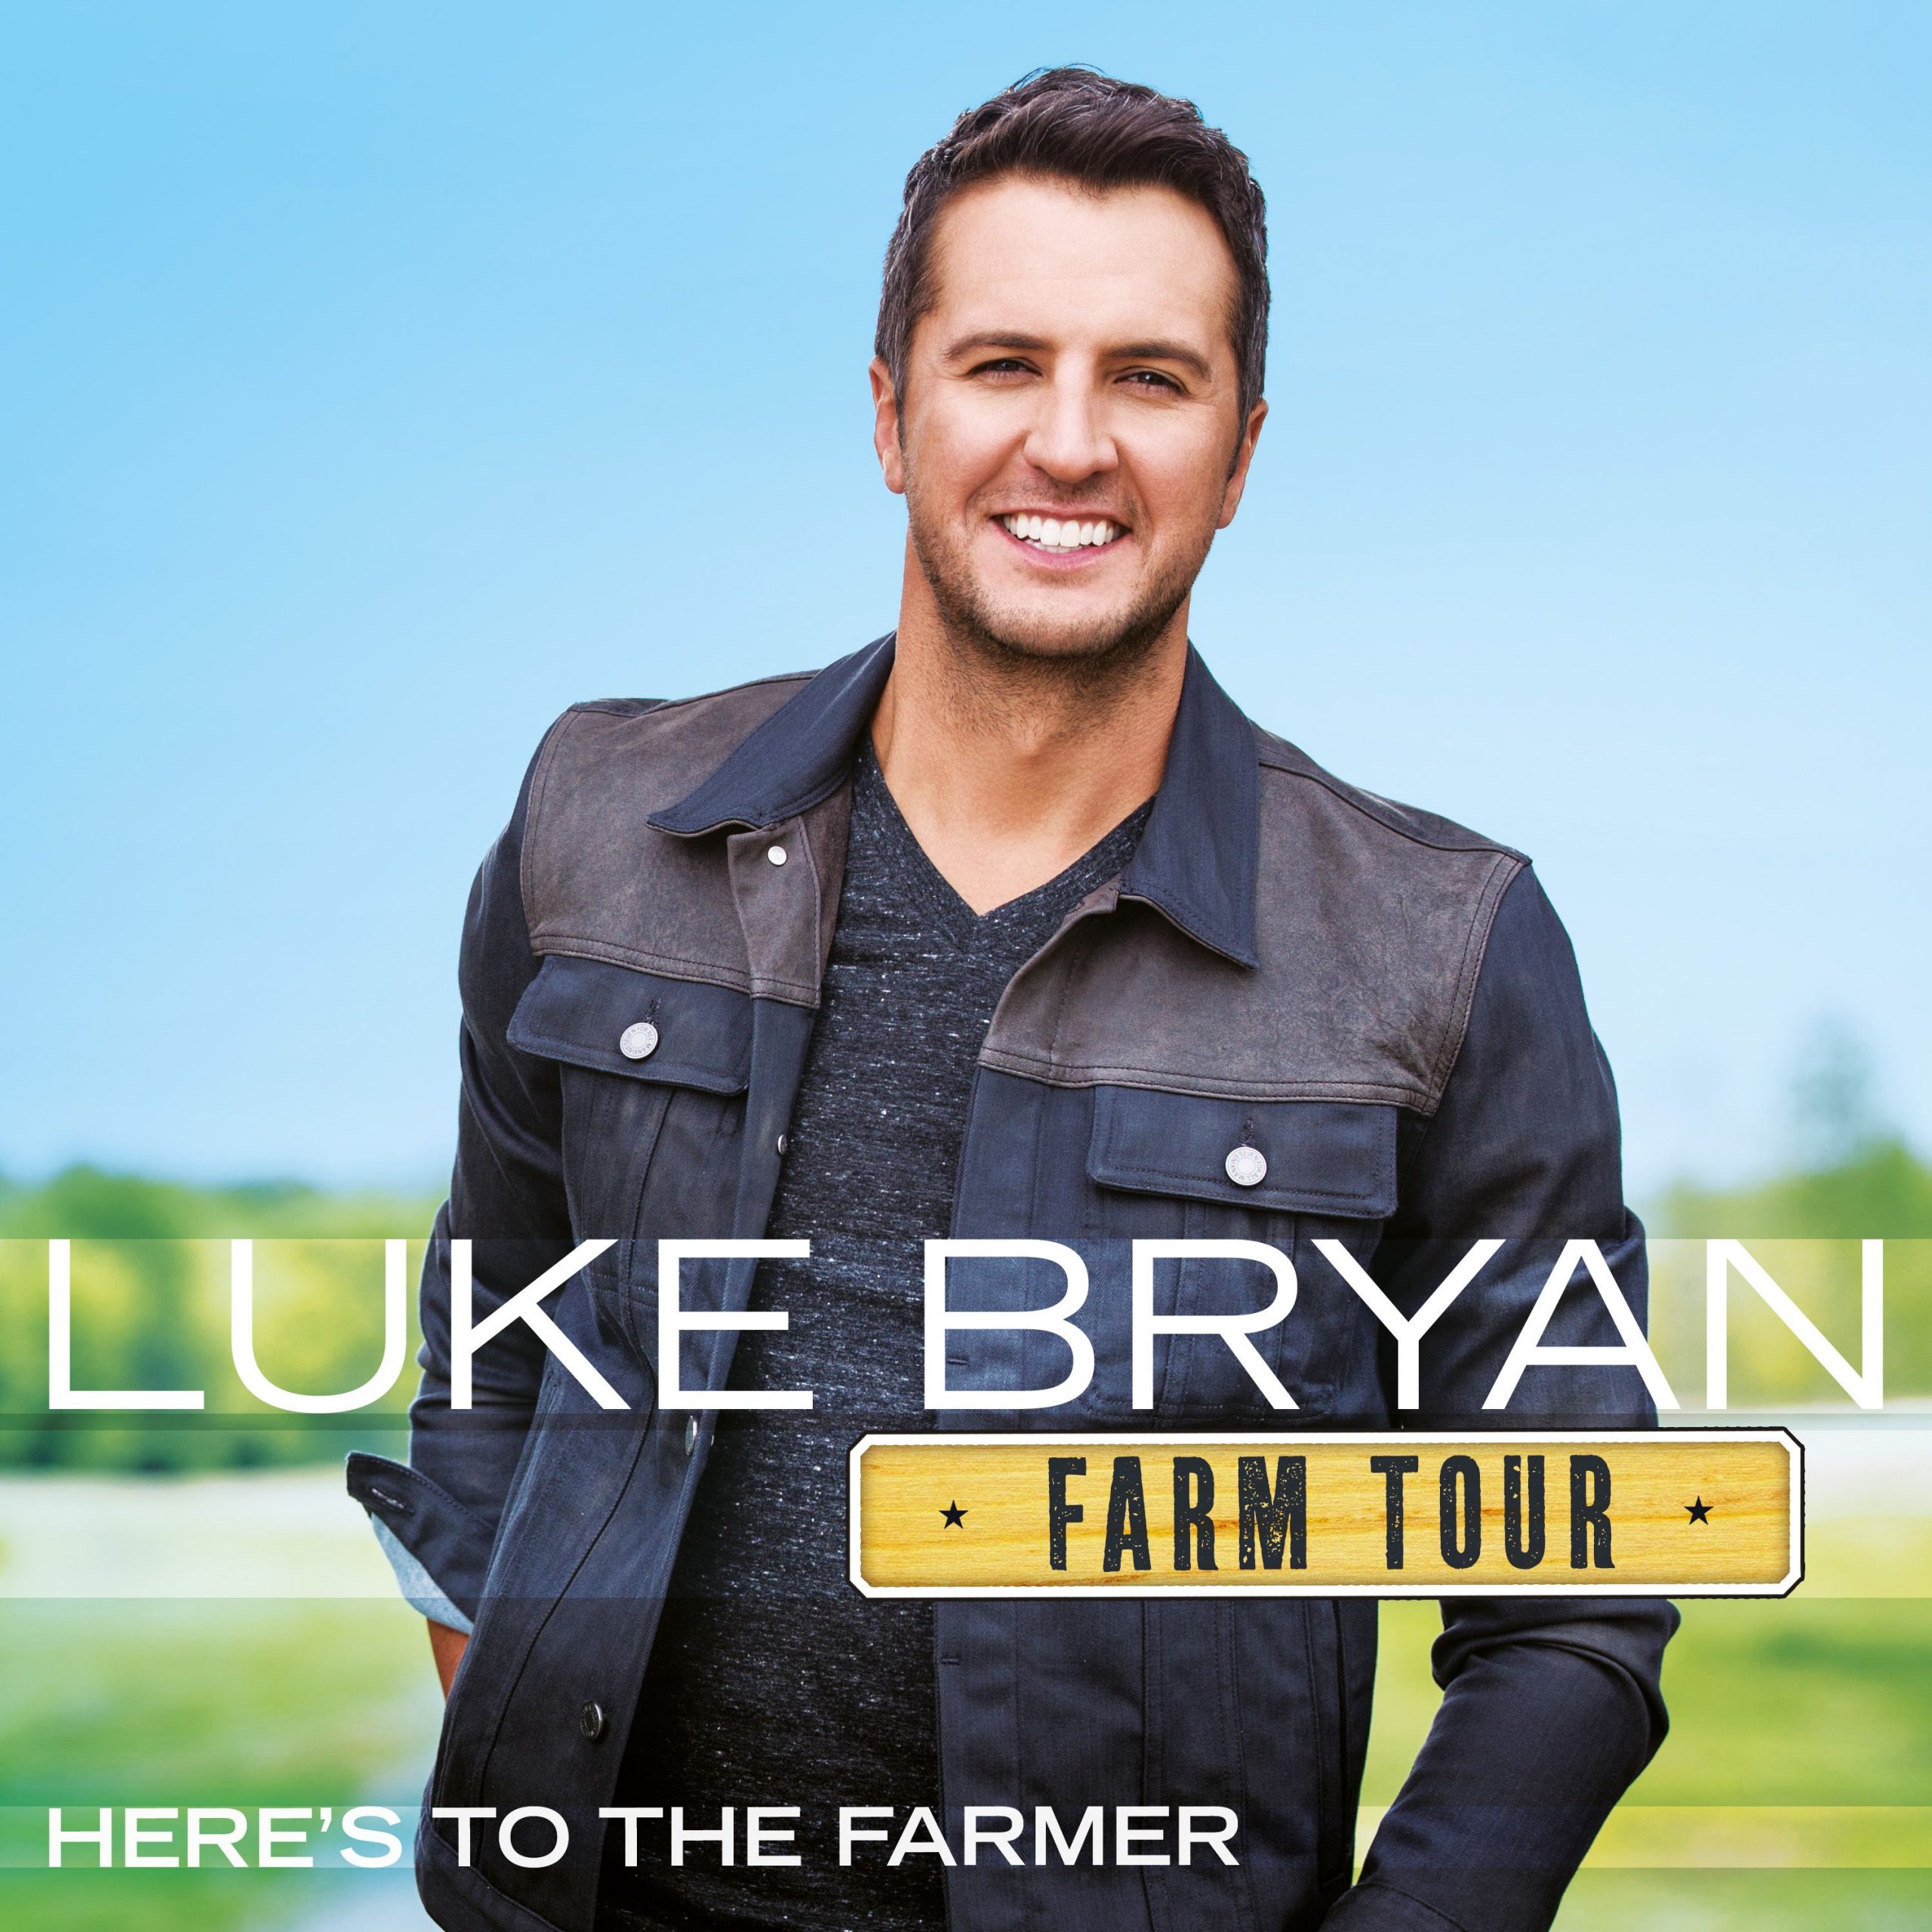 Luke Bryan’s FirstEver Farm Tour EP, Farm Tour…Here’s To The Farmer